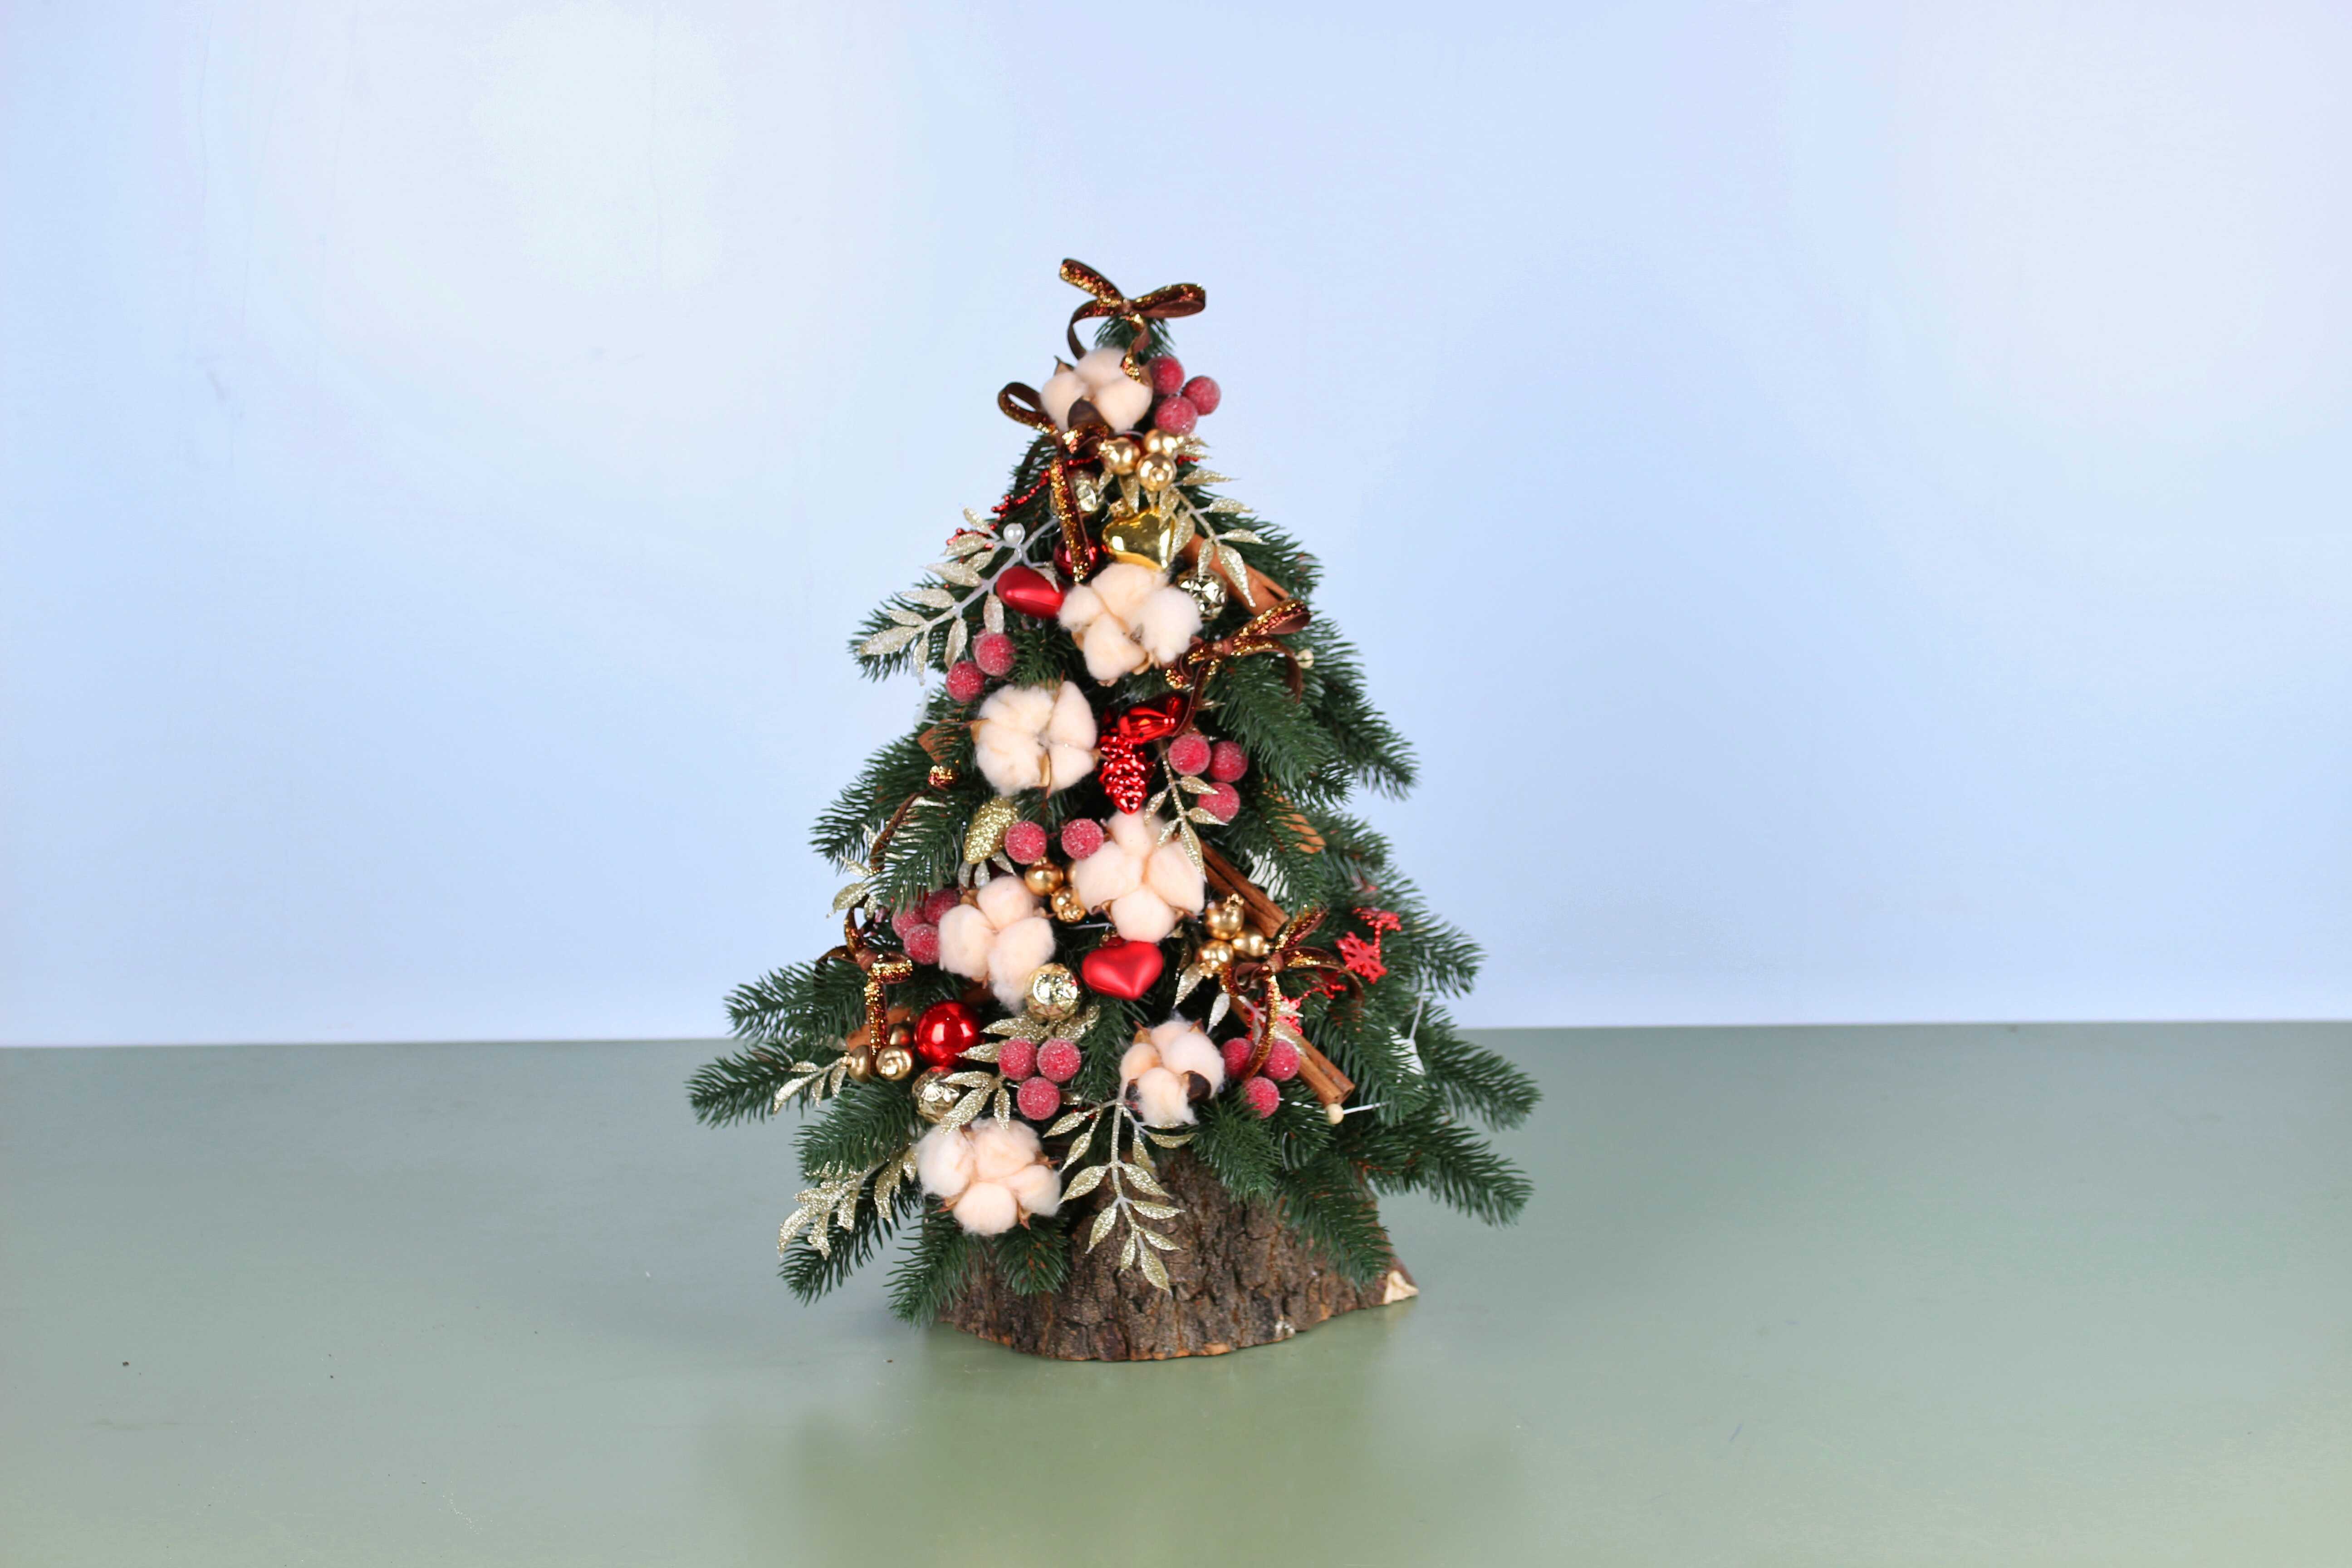 DESIGNER TREE "CHRISTMAS MIRACLE"